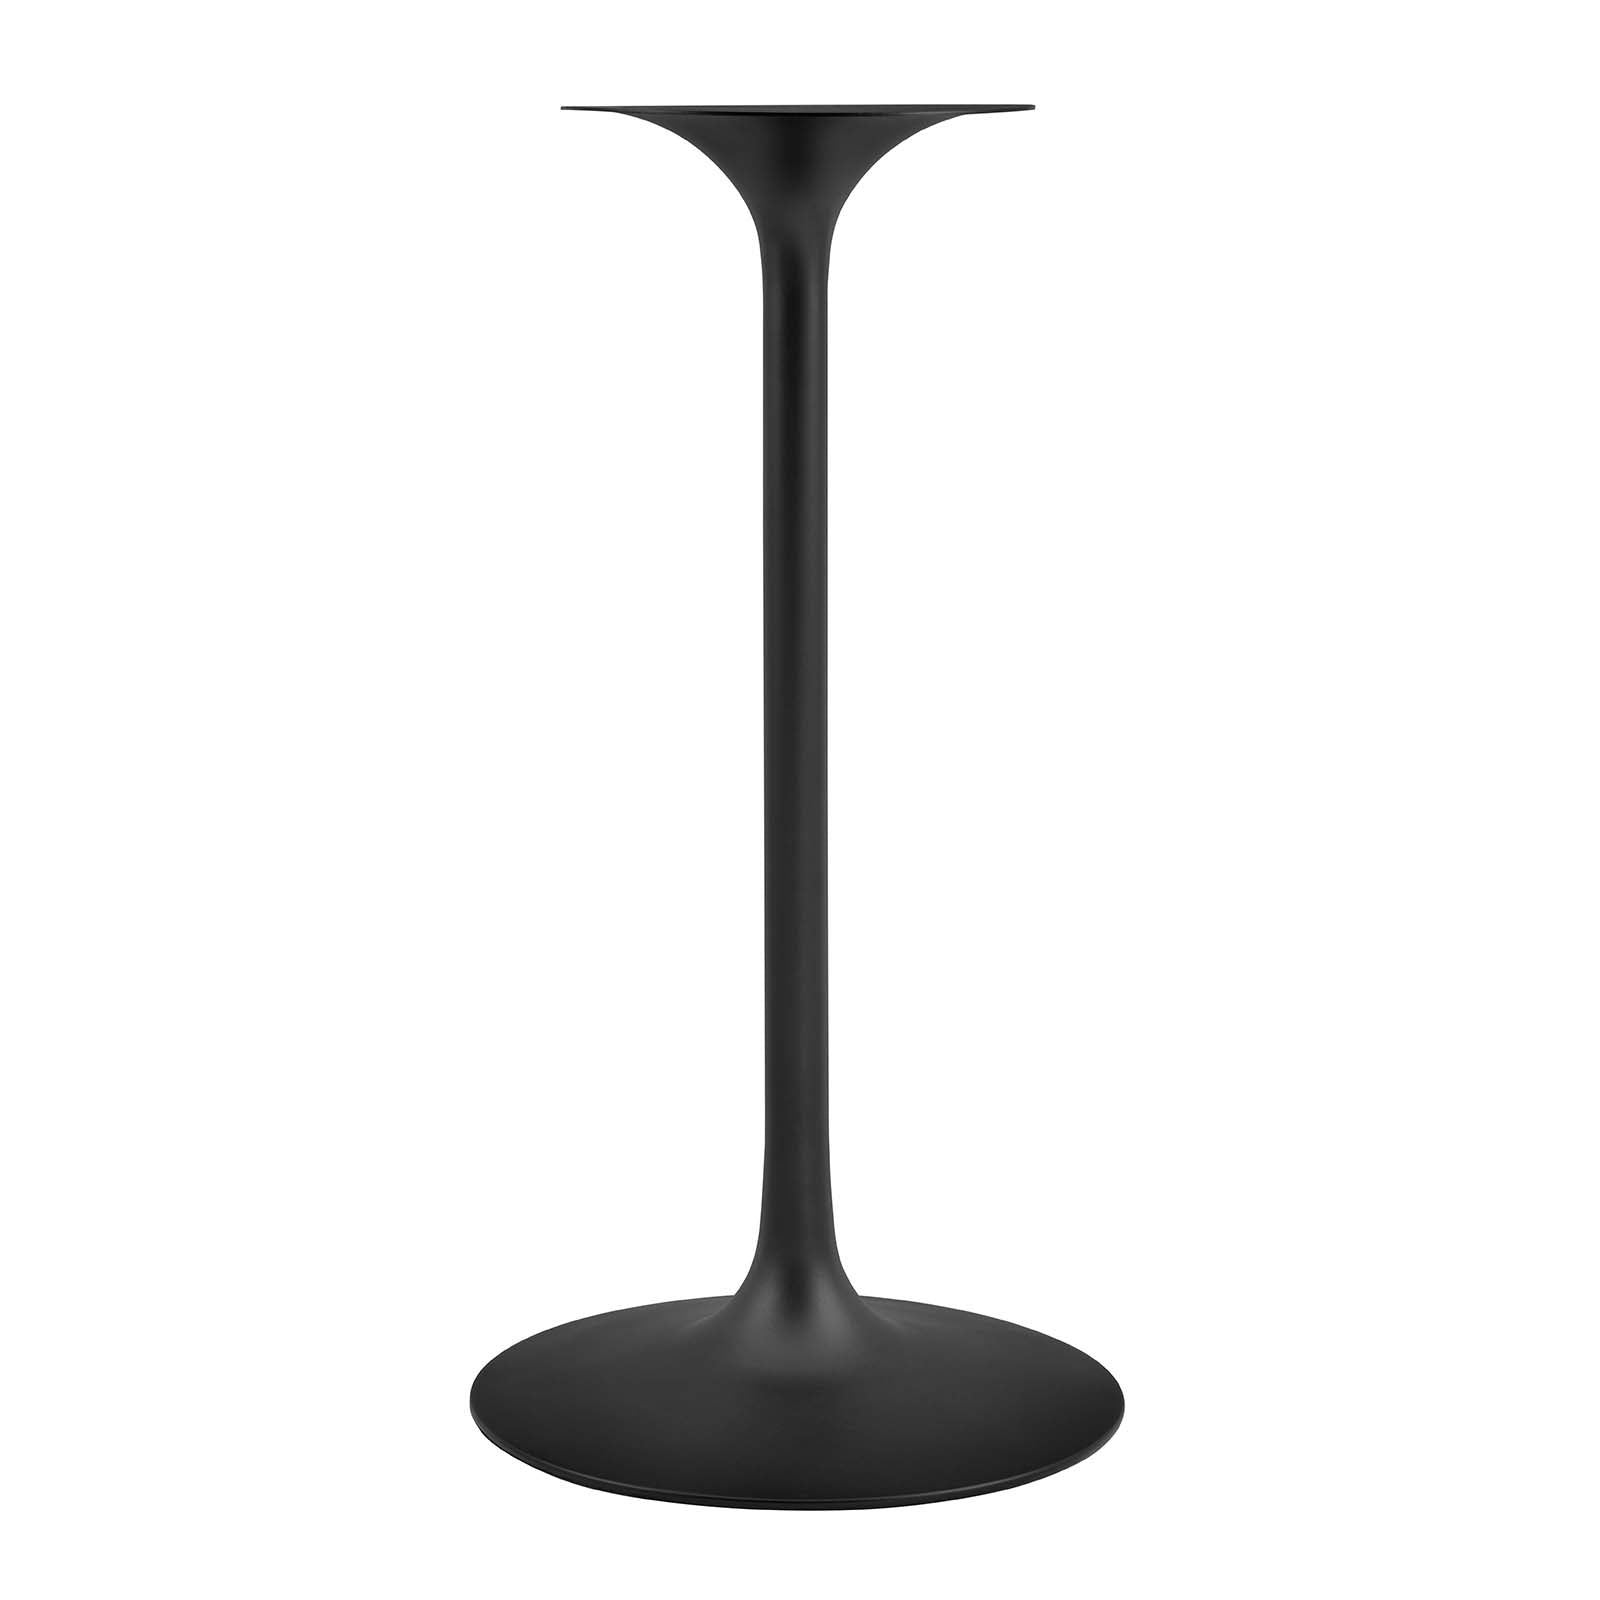 Modway Bar Tables - Lippa 28" Round Wood Bar Table Black White